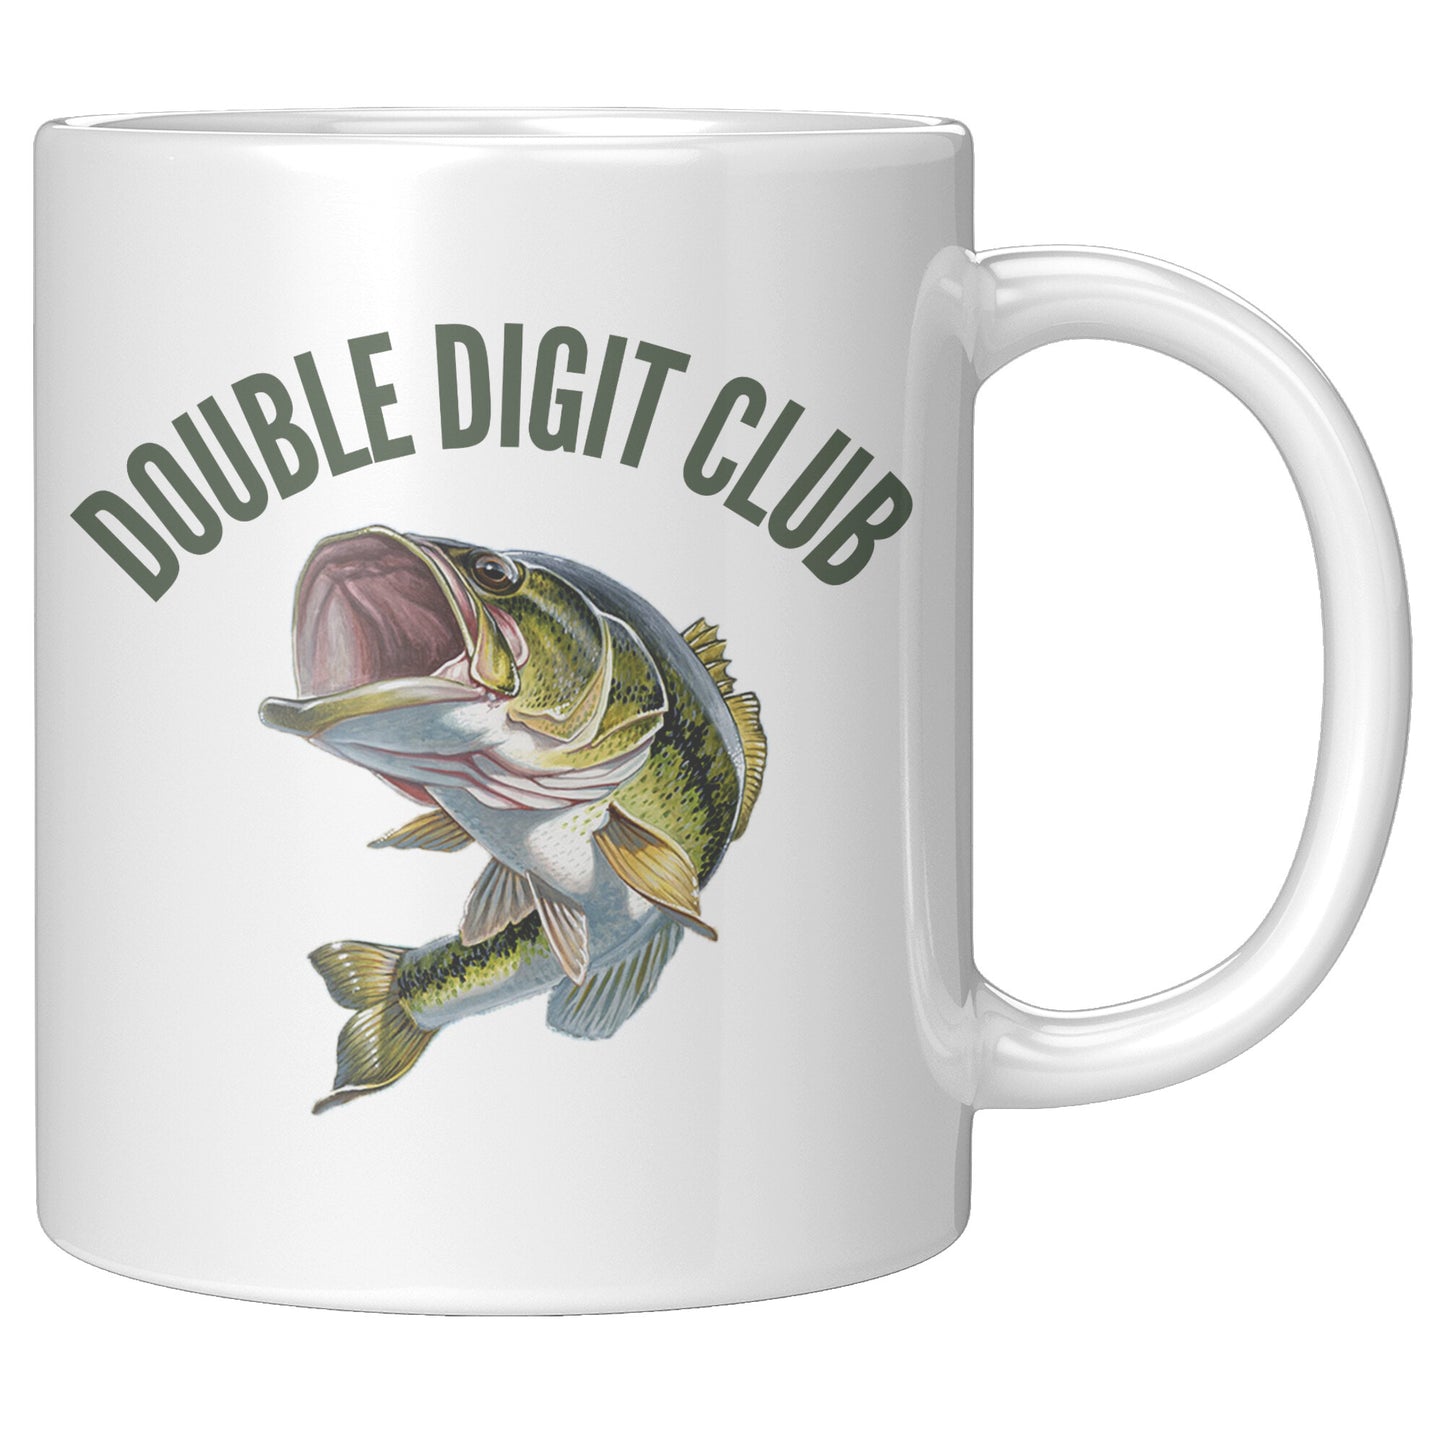 Double Digit Club